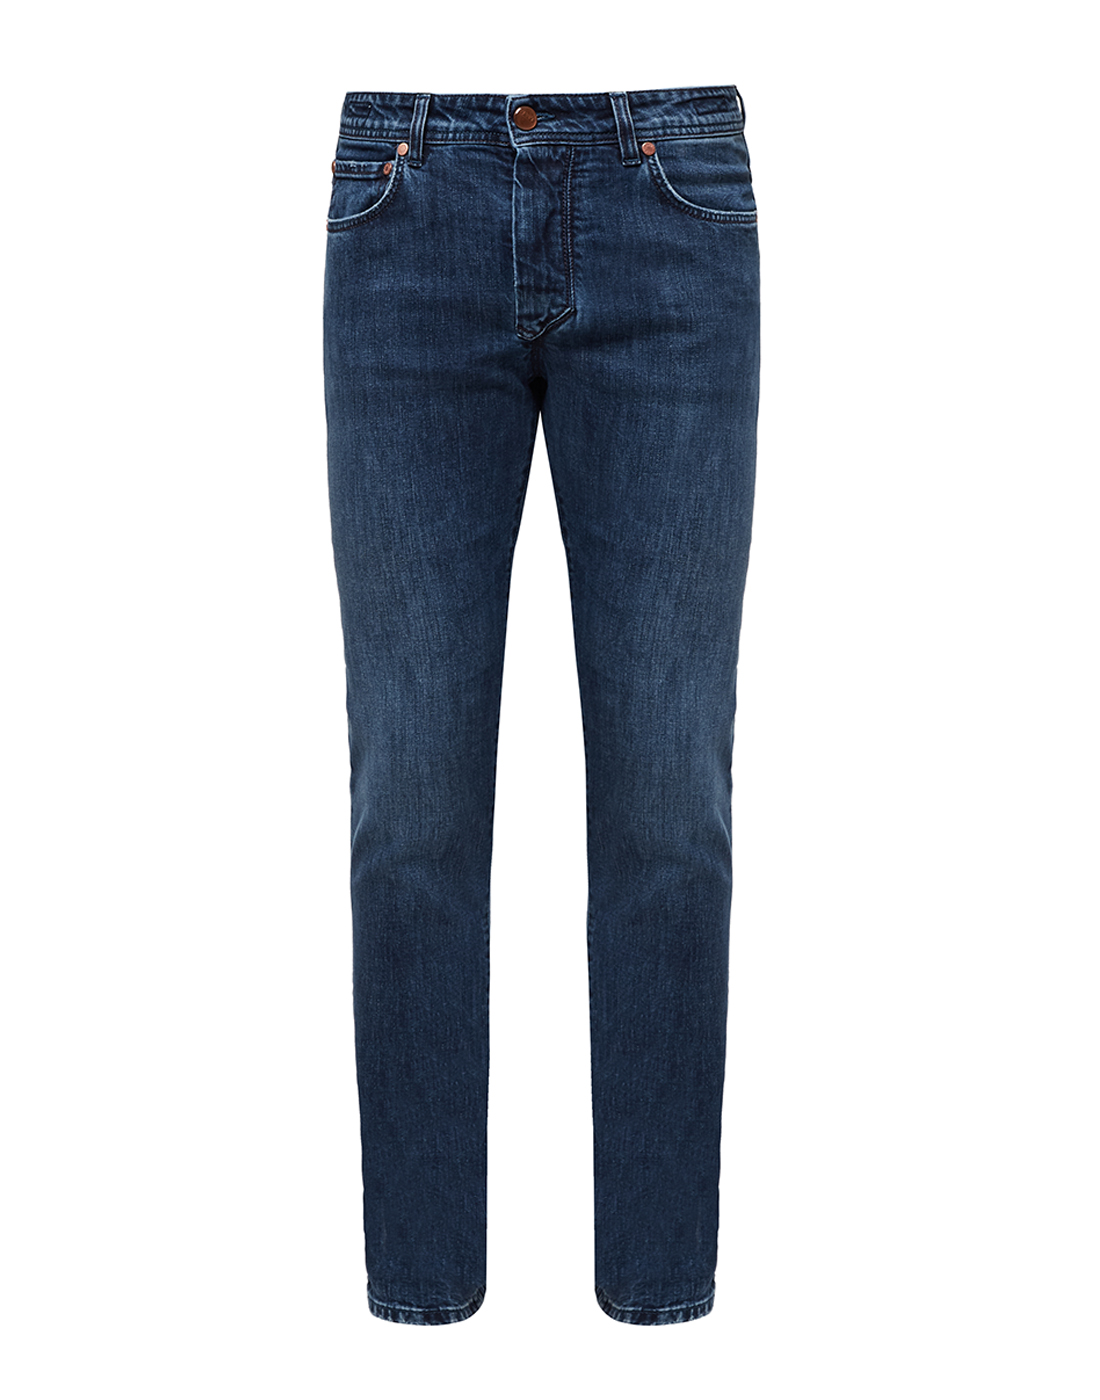 Мужские синие джинсы Barba SJFIVE 14032-1